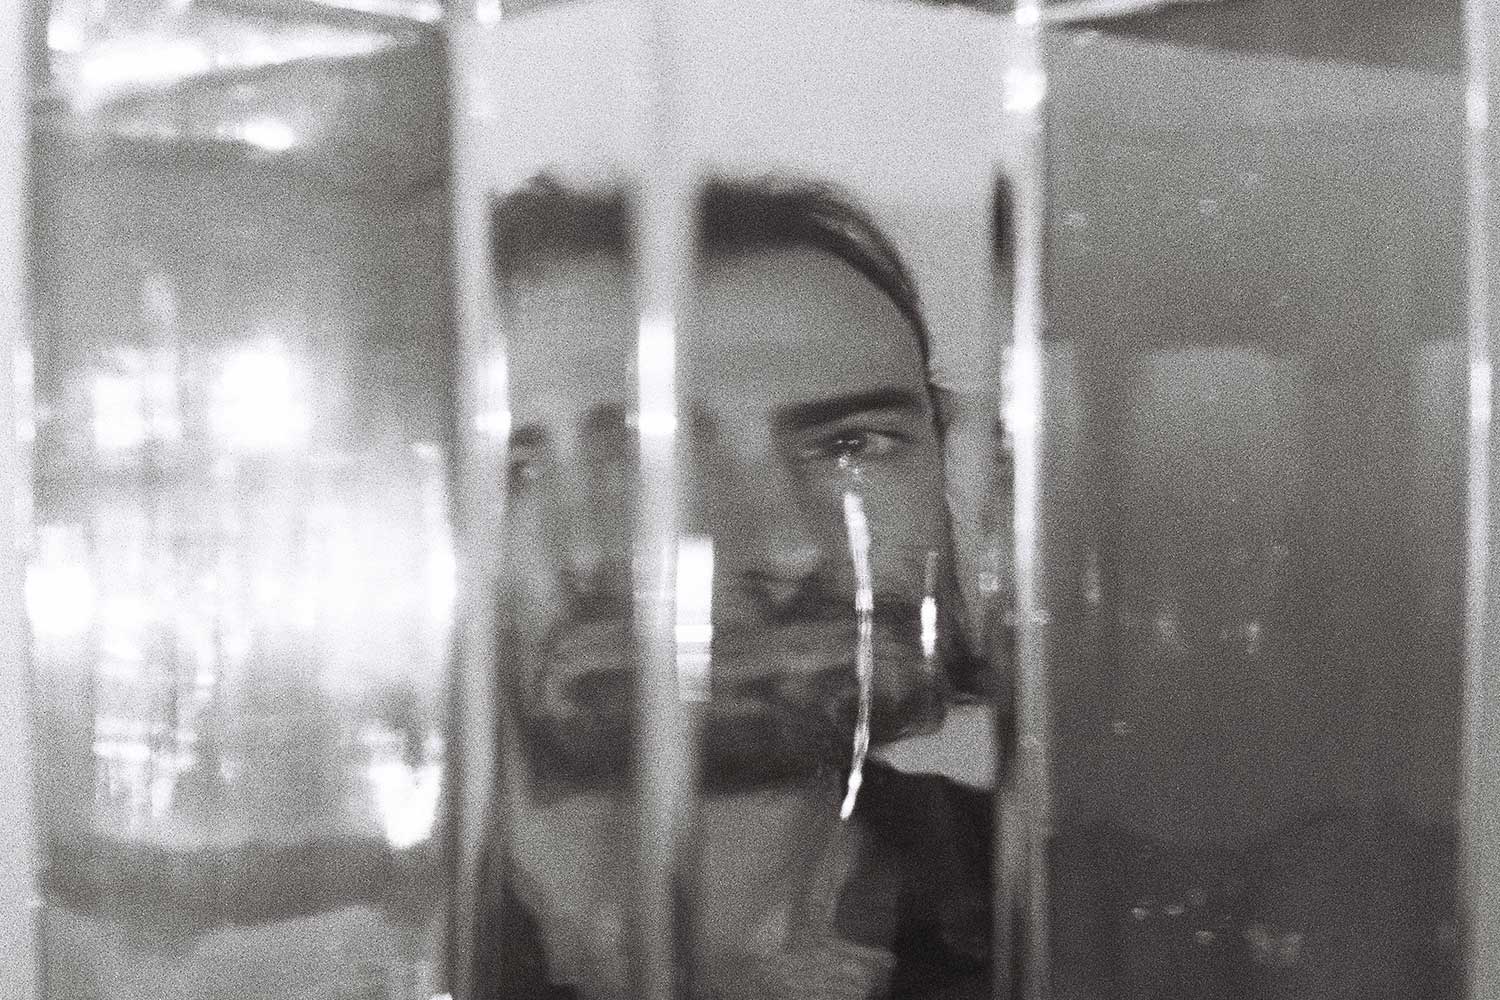 portrait of Chandler Kelley of Canopy Joc distorted through glass vases